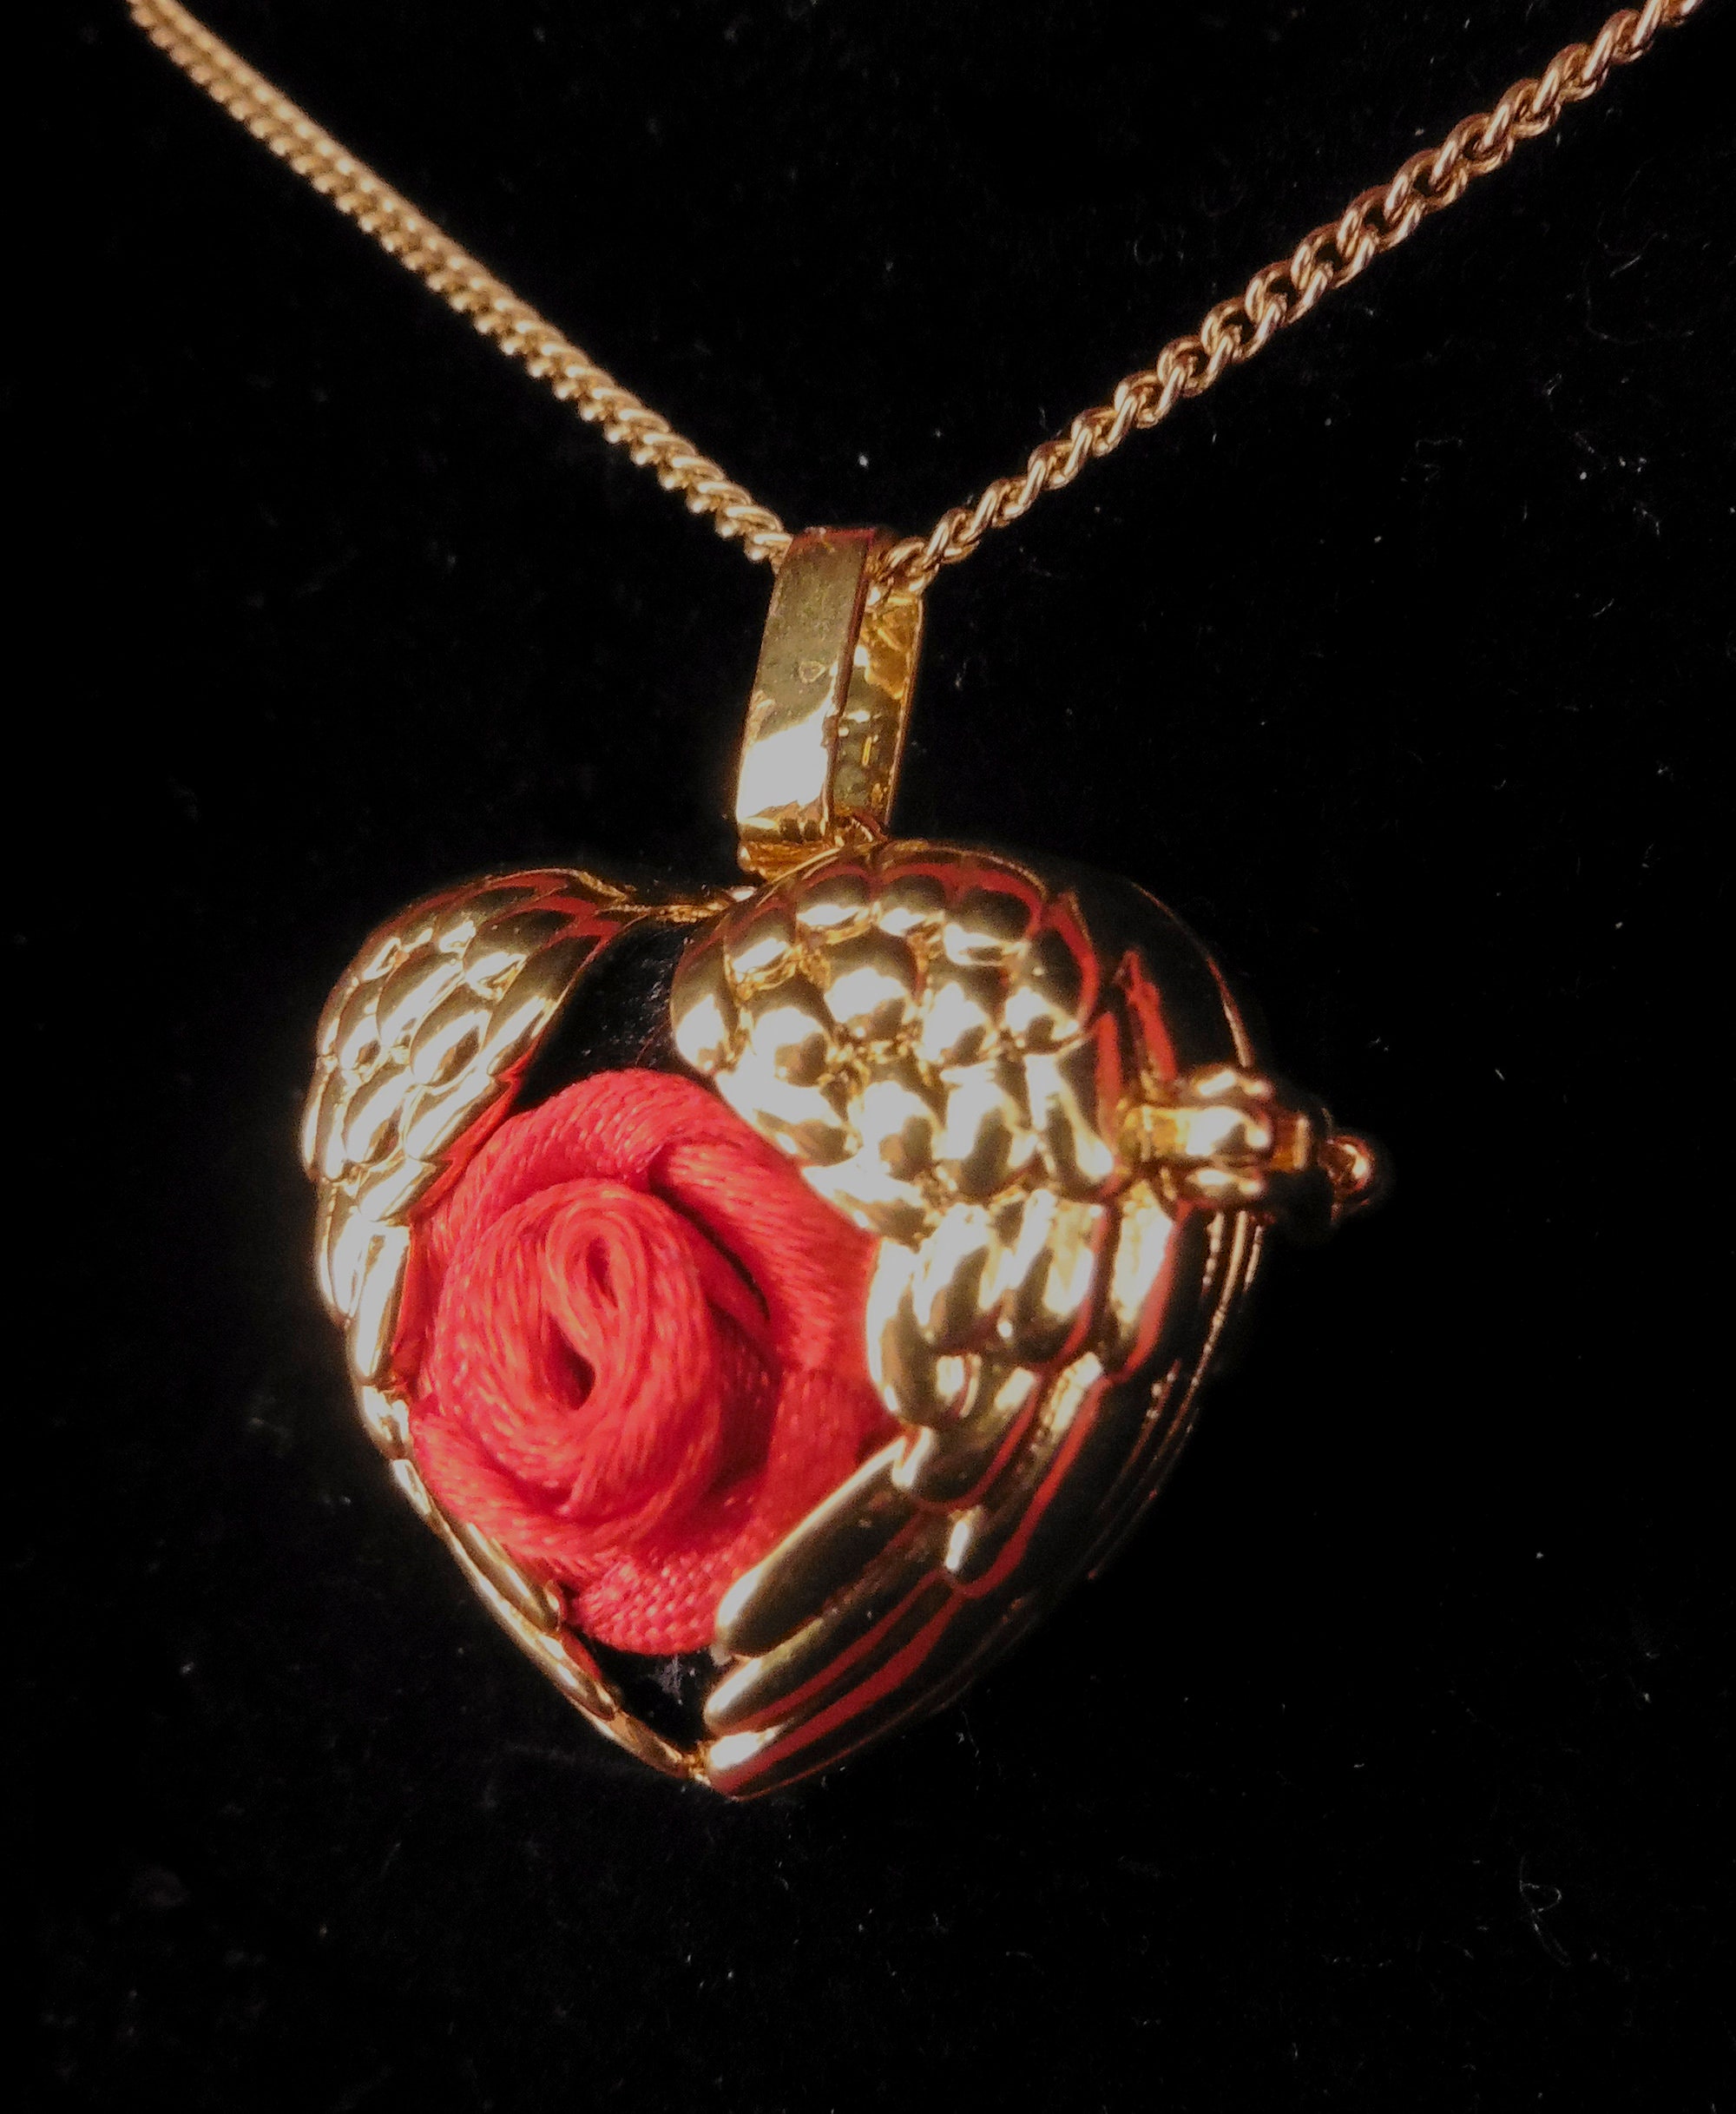 ir24kGold plated wing heart locket pendant diffuser scented necklace satin ruban rose heady aromatherapy,aphrodisiac,harmony jewelry